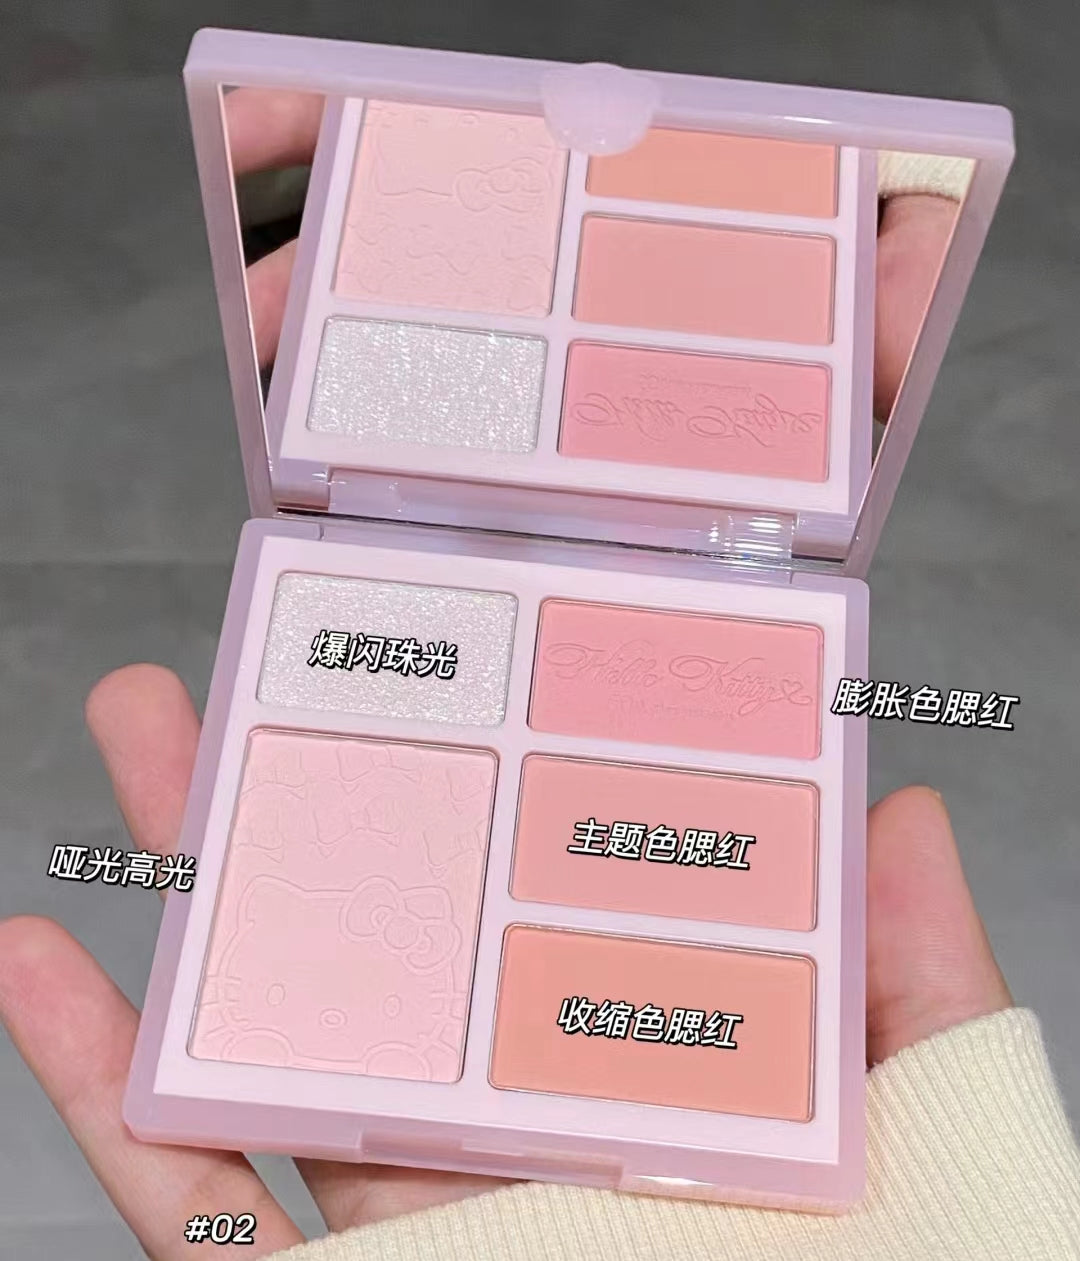 Pink Bear x Hello Kitty Eyeshadow Contour Palette 9.5g 皮可熊HelloKitty联名眼影修容综合粉盘